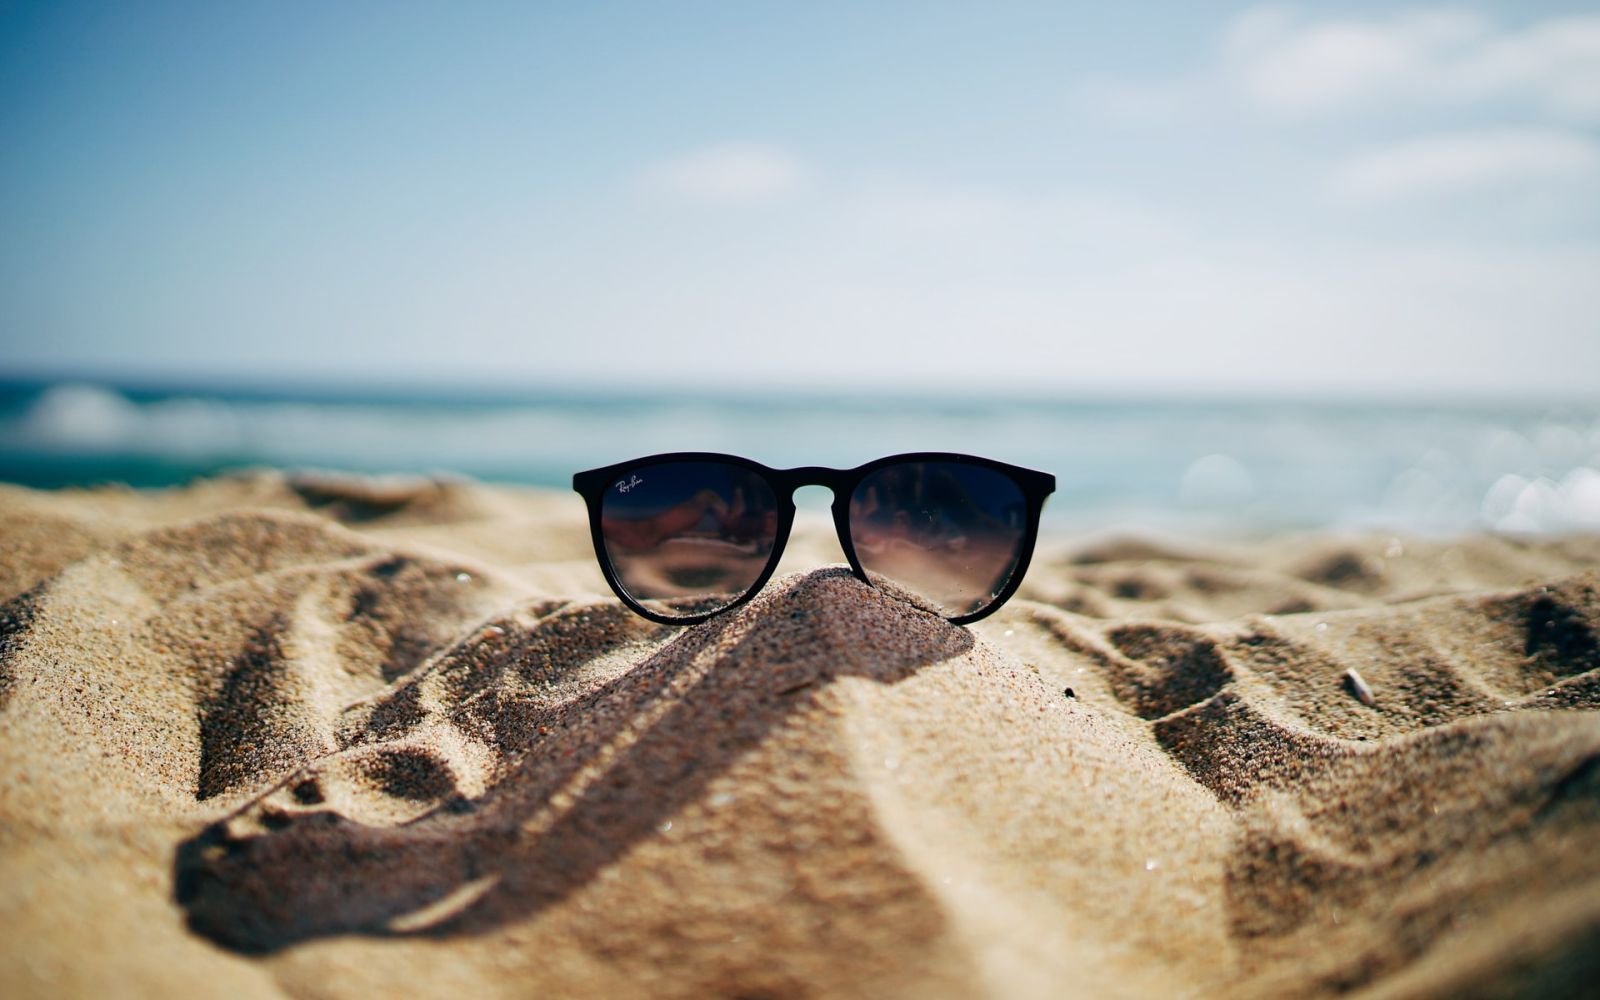 sunglasses at beach